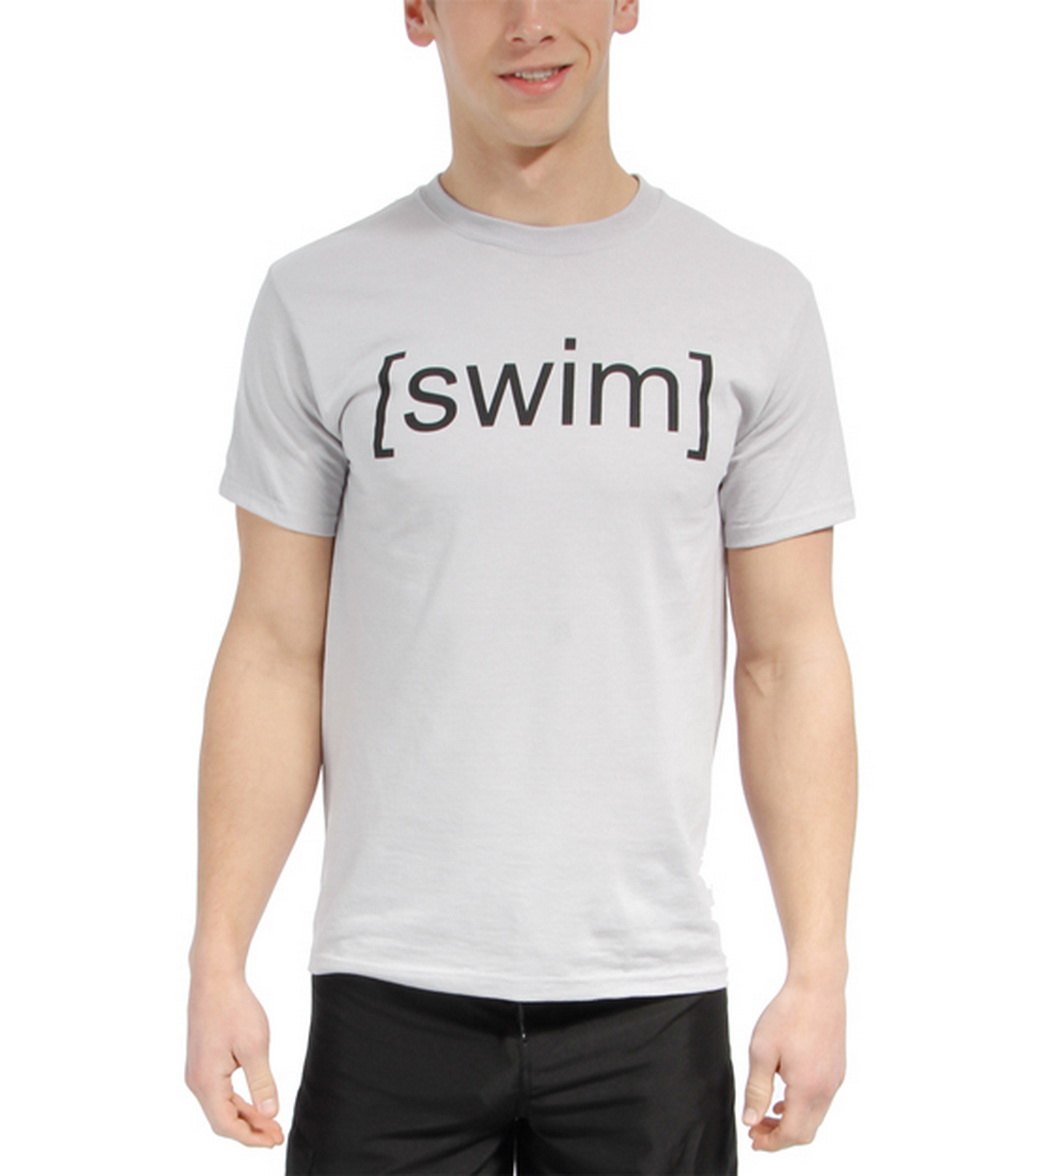 Ambro Manufacturing Men's Swim Tee Shirt - Grey Youth Small Cotton - Swimoutlet.com